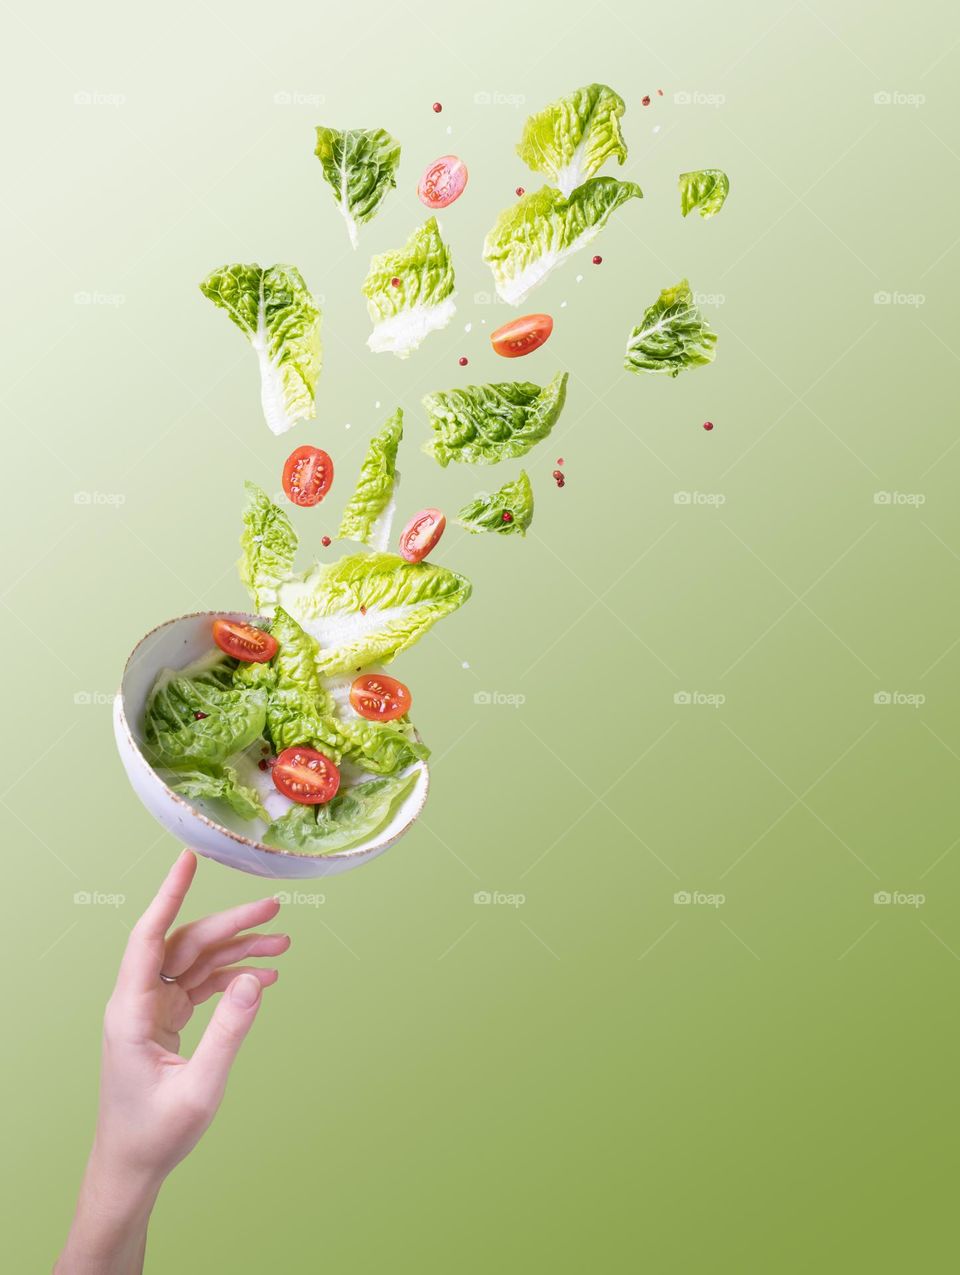 Salad levitation 